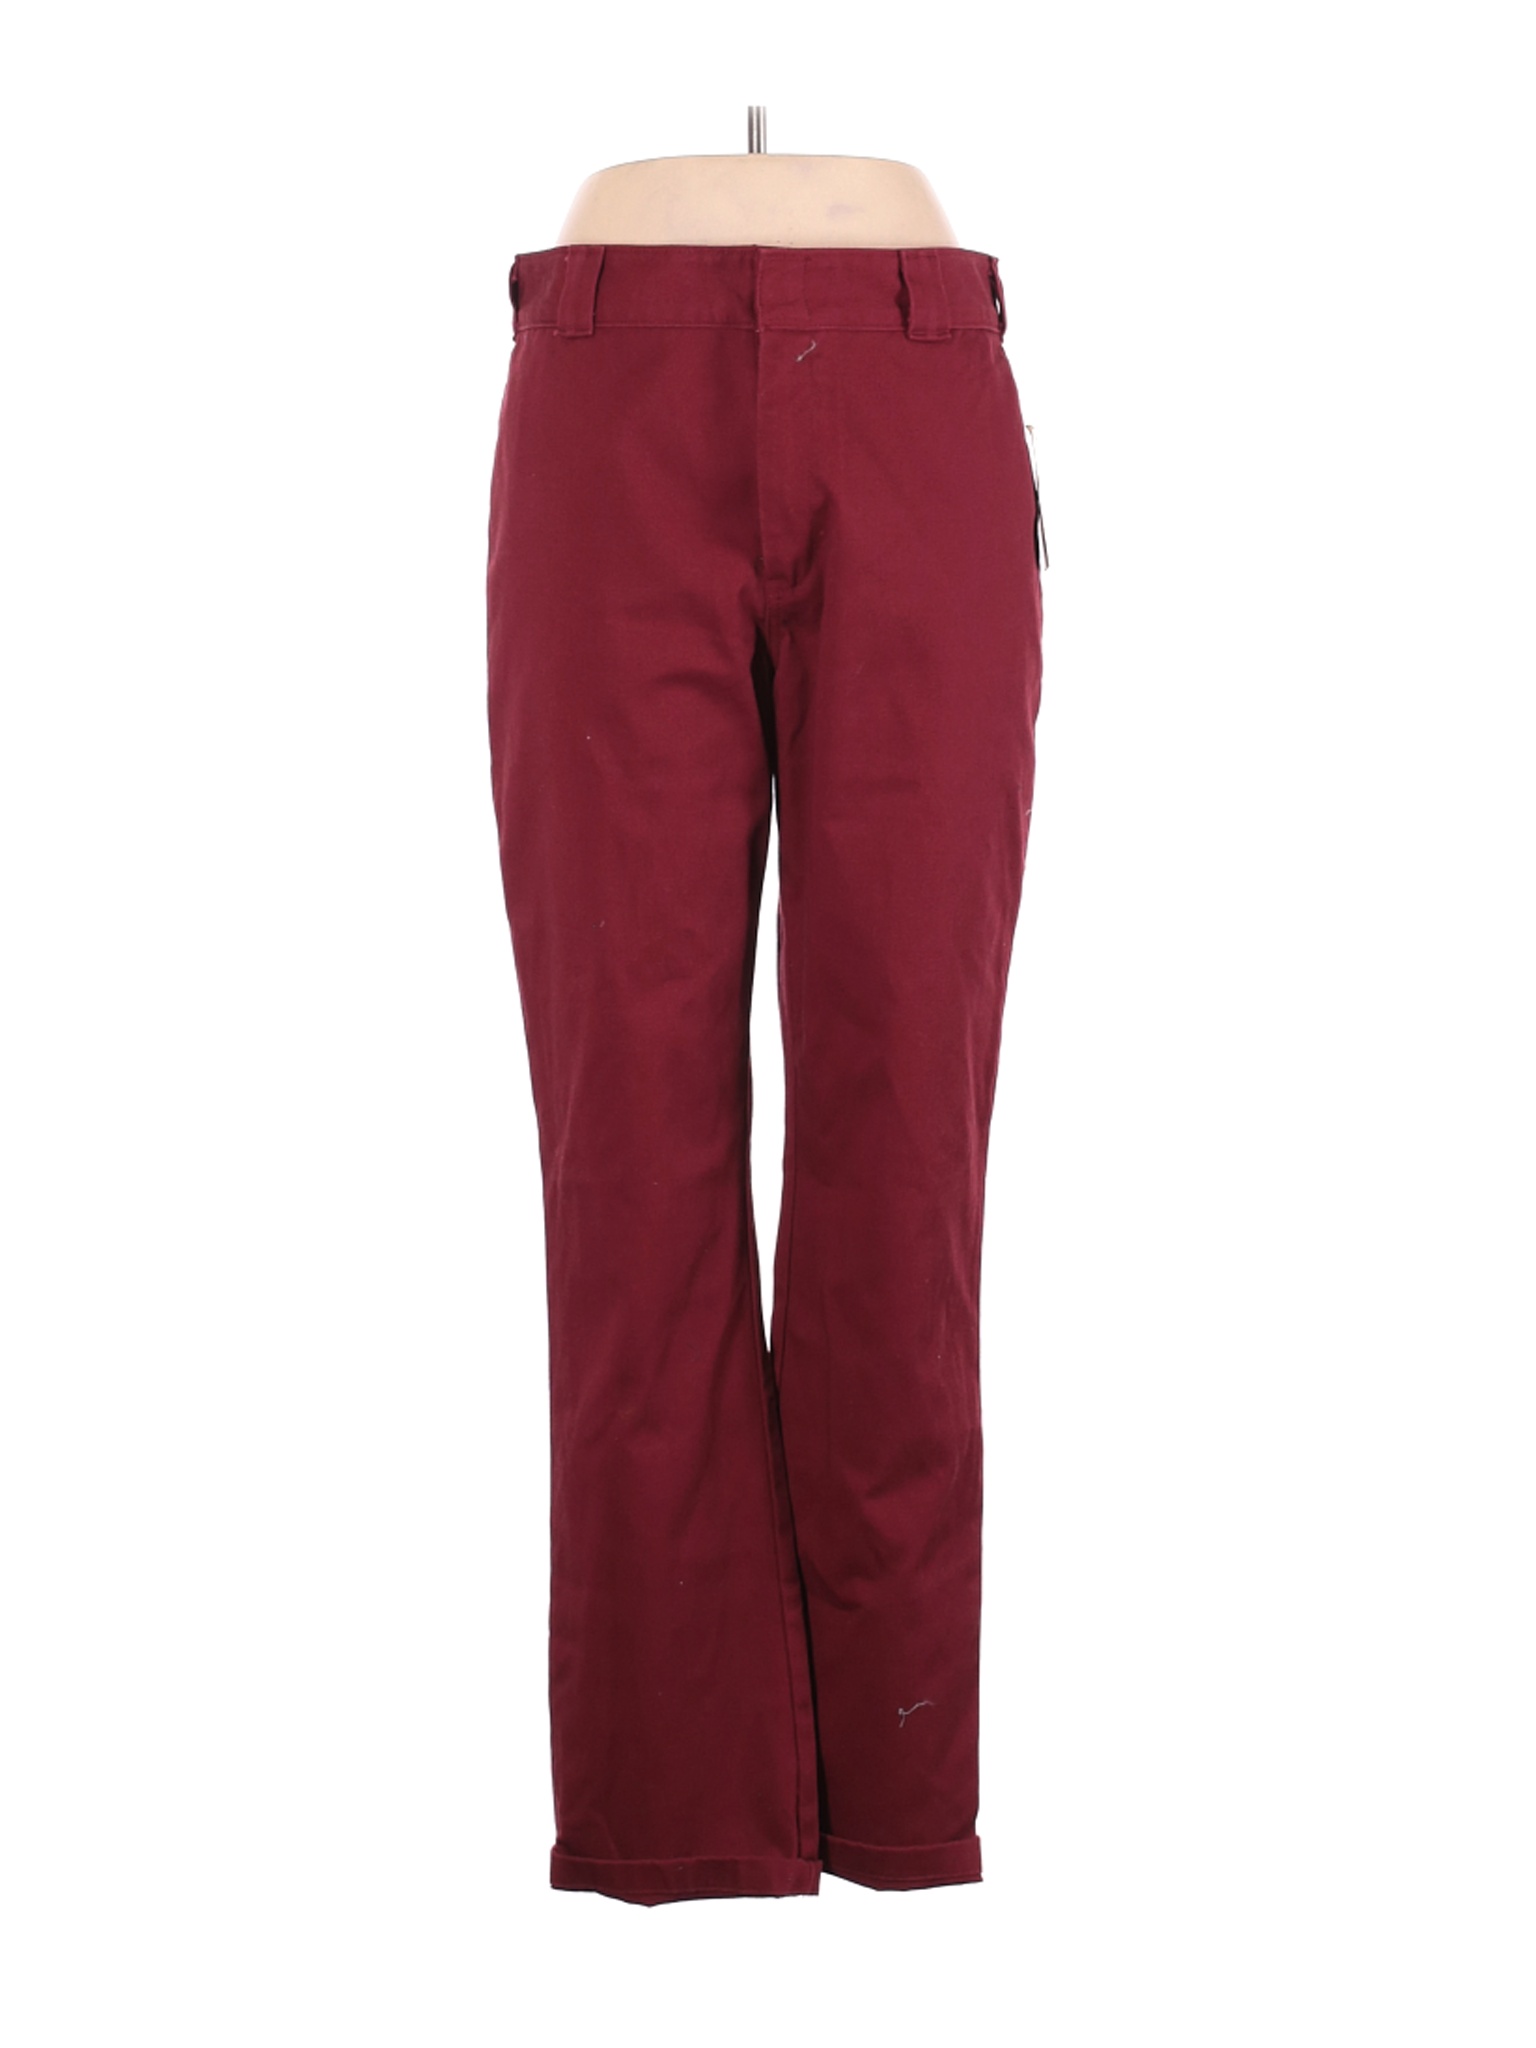 NWT Dickies Women Red Jeans 30W | eBay